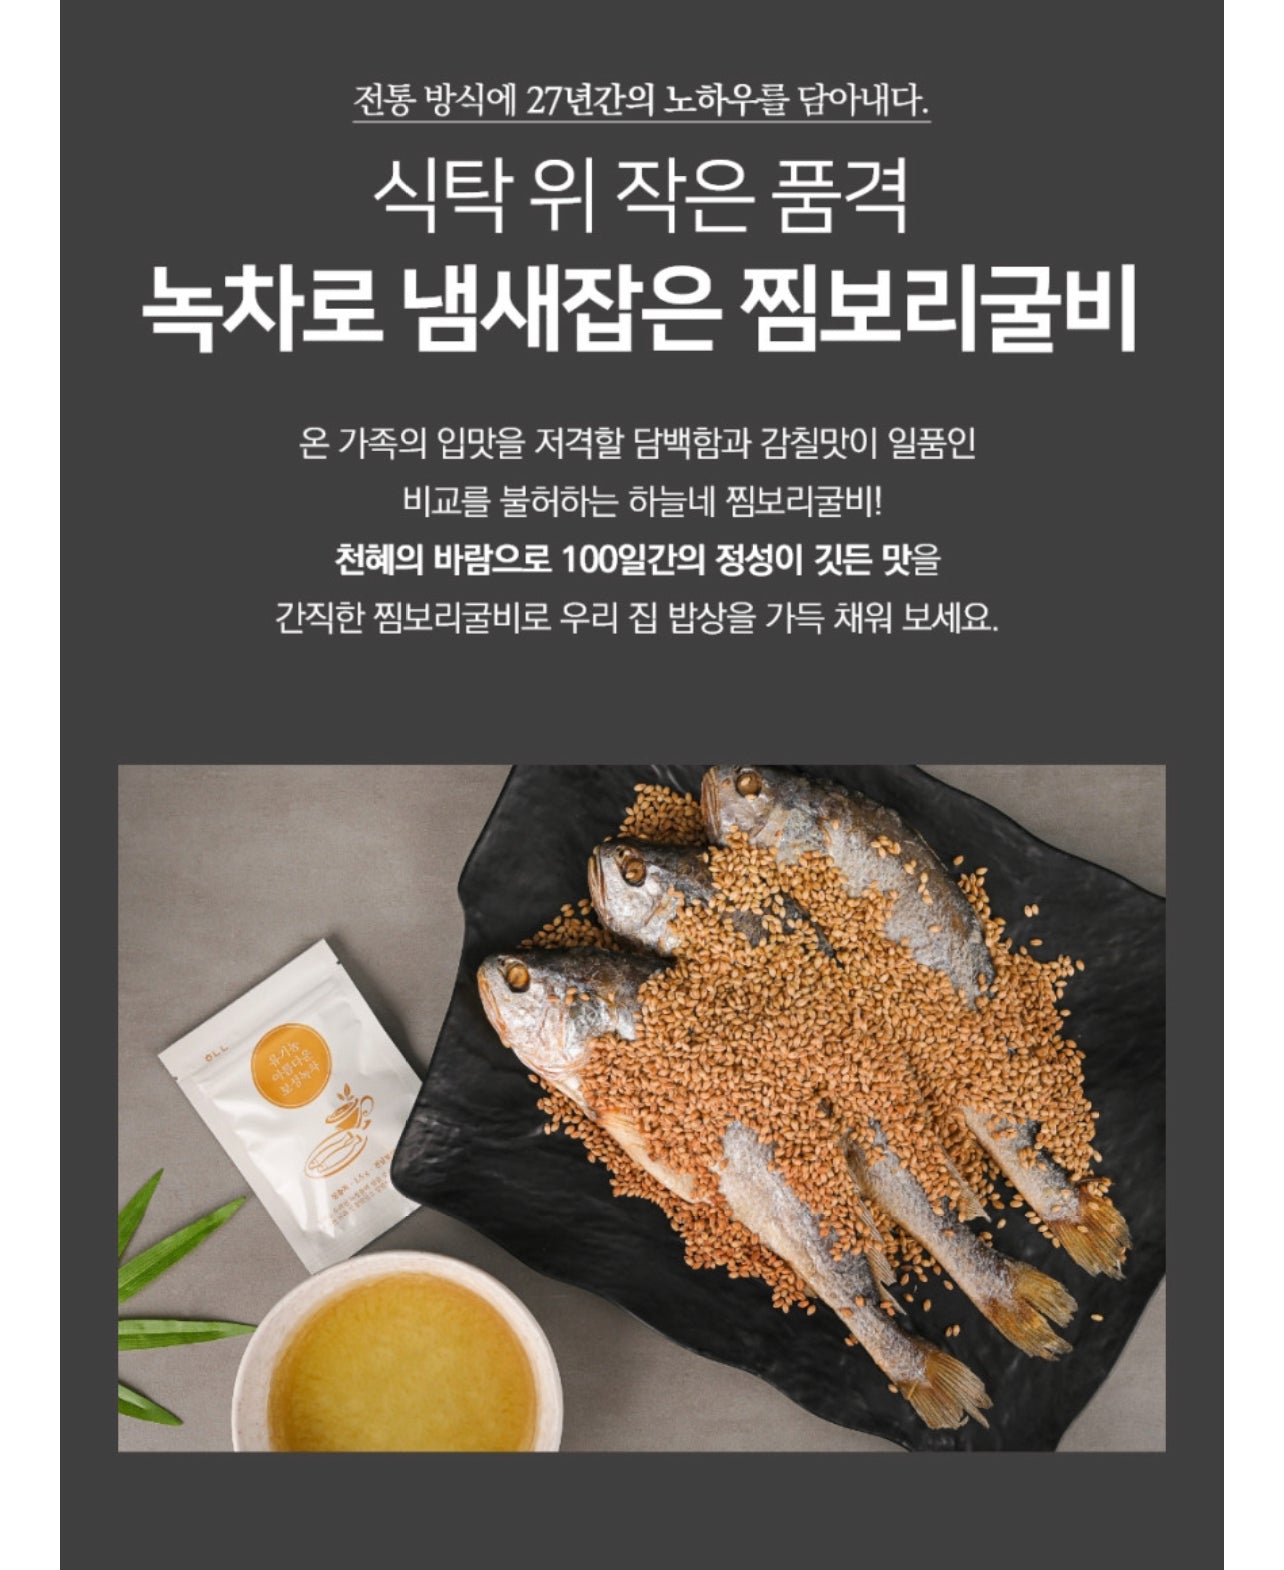 [Shipping to Korea 고국배송] Steamed Barley Gulbi 찜 보리굴비 [10 Packs]